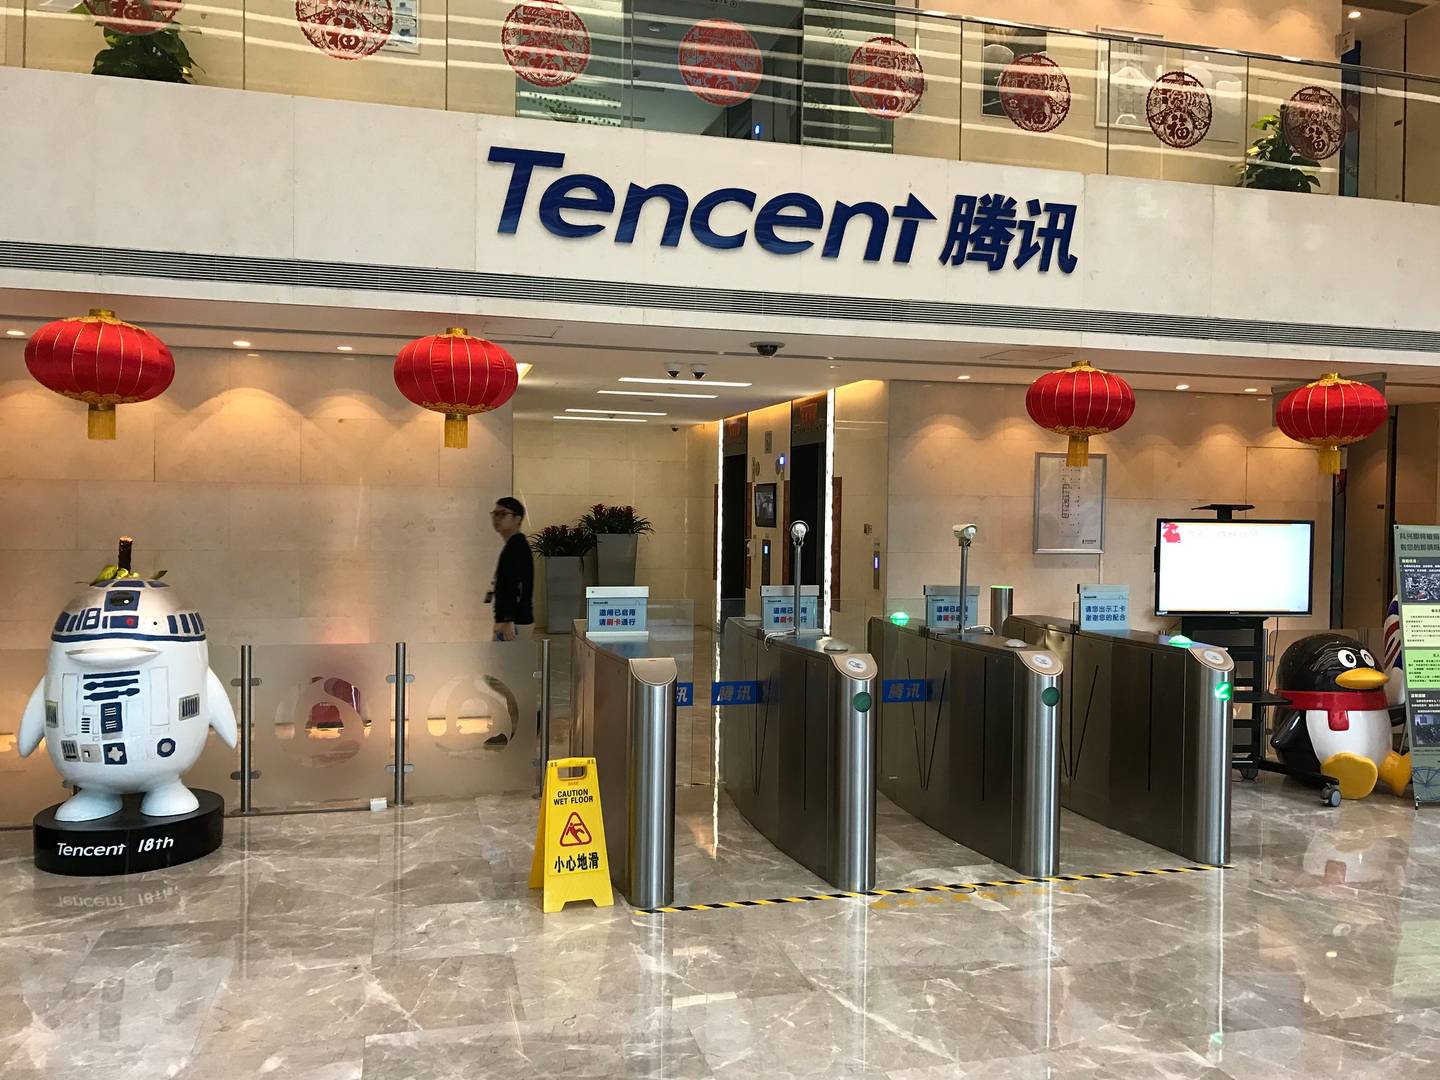 Офис компании Tencent, г. Шэньчжэнь, Китай